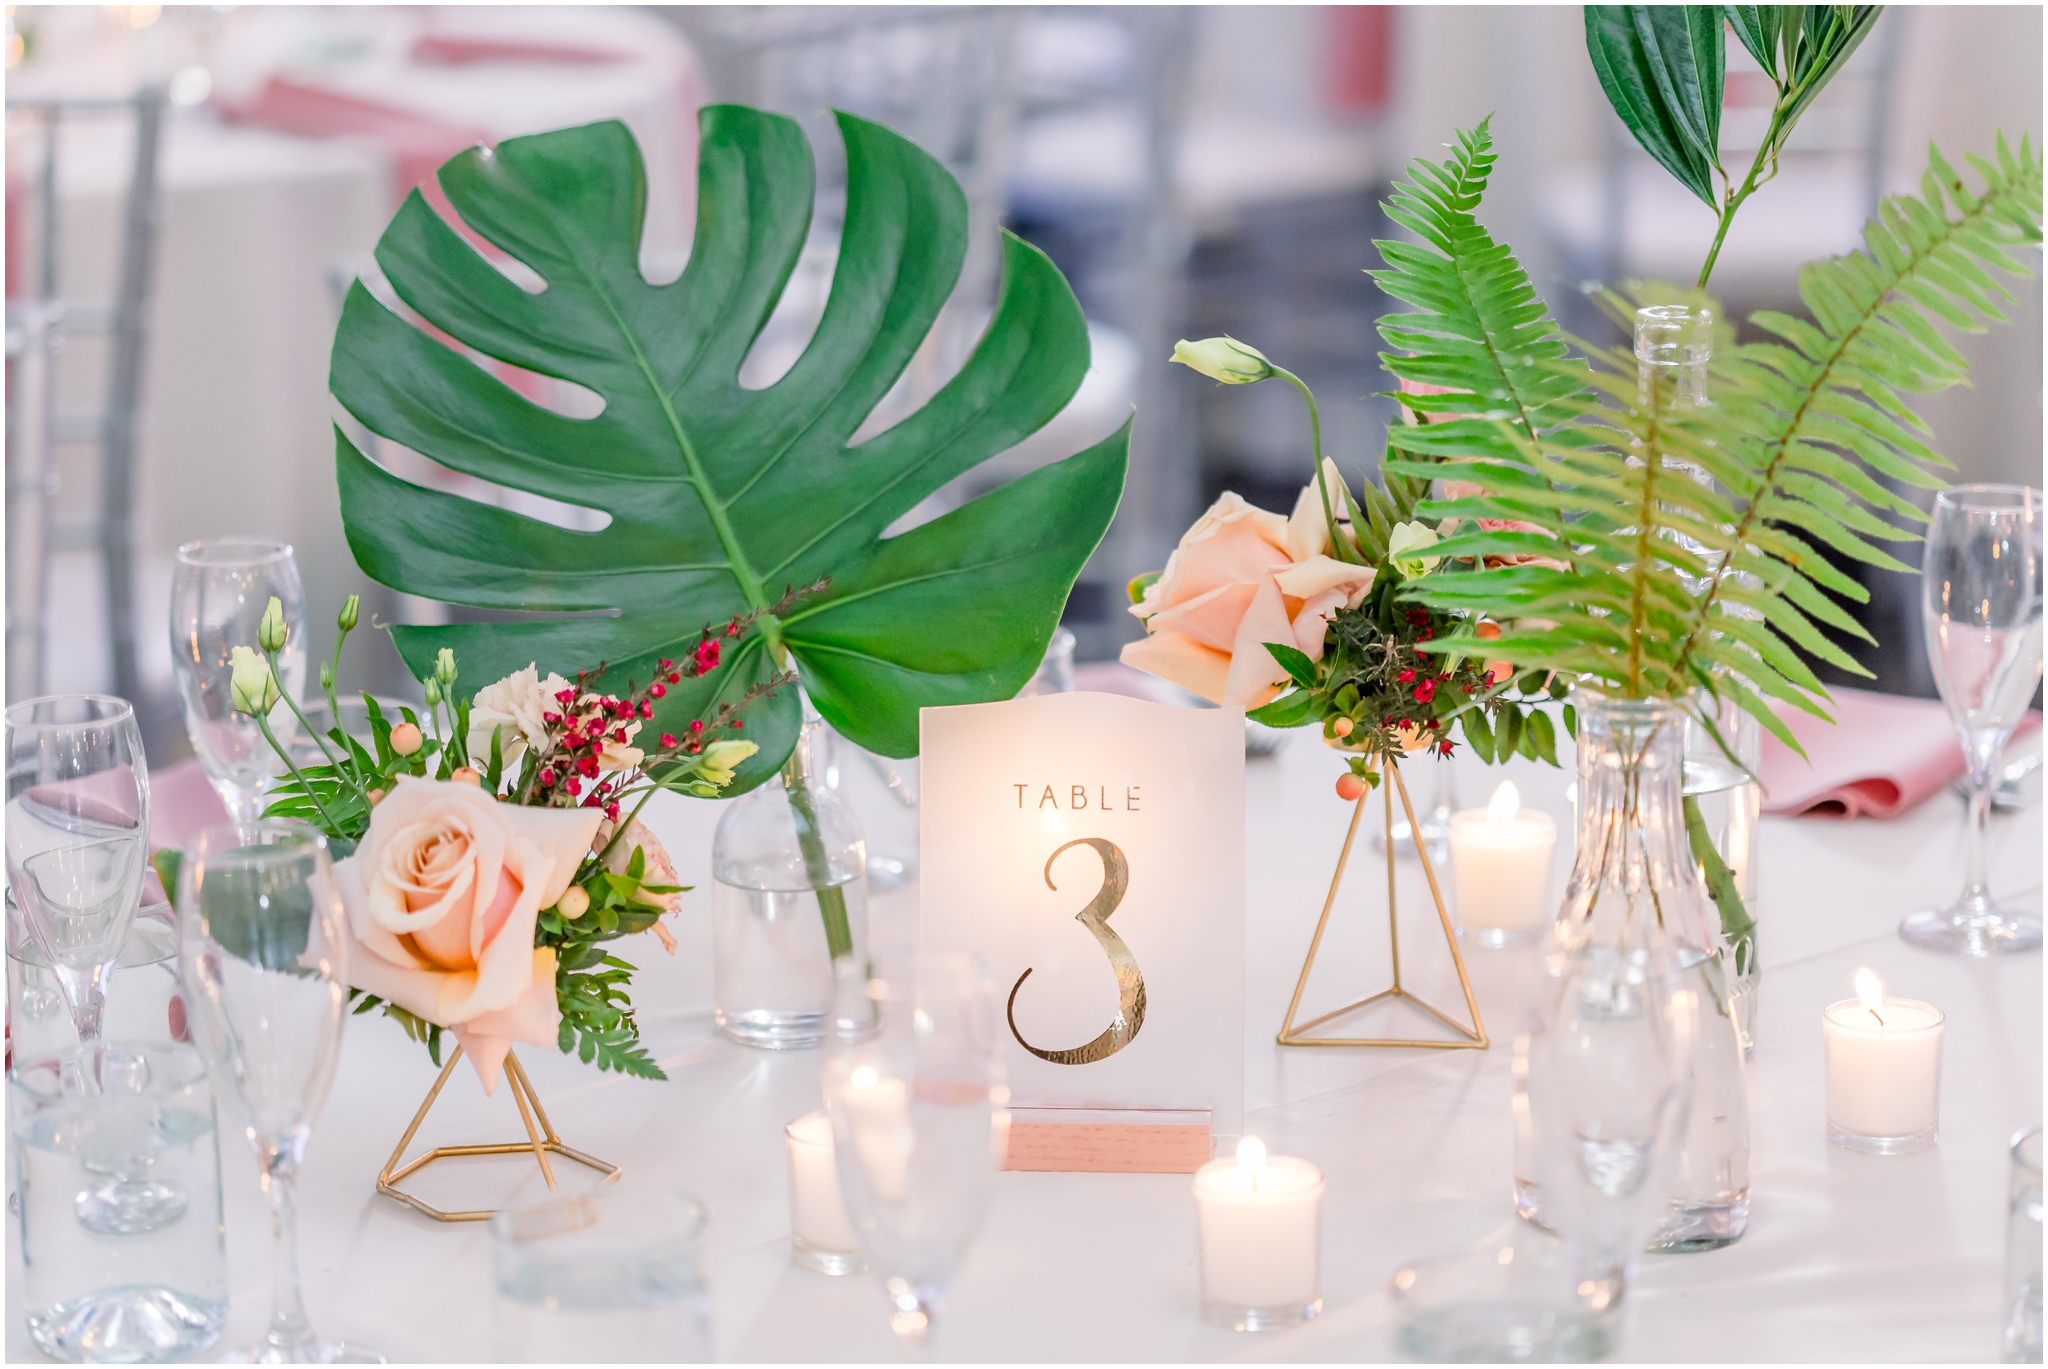 votive candles, tropical leaves, table decor, SoHo63 reception